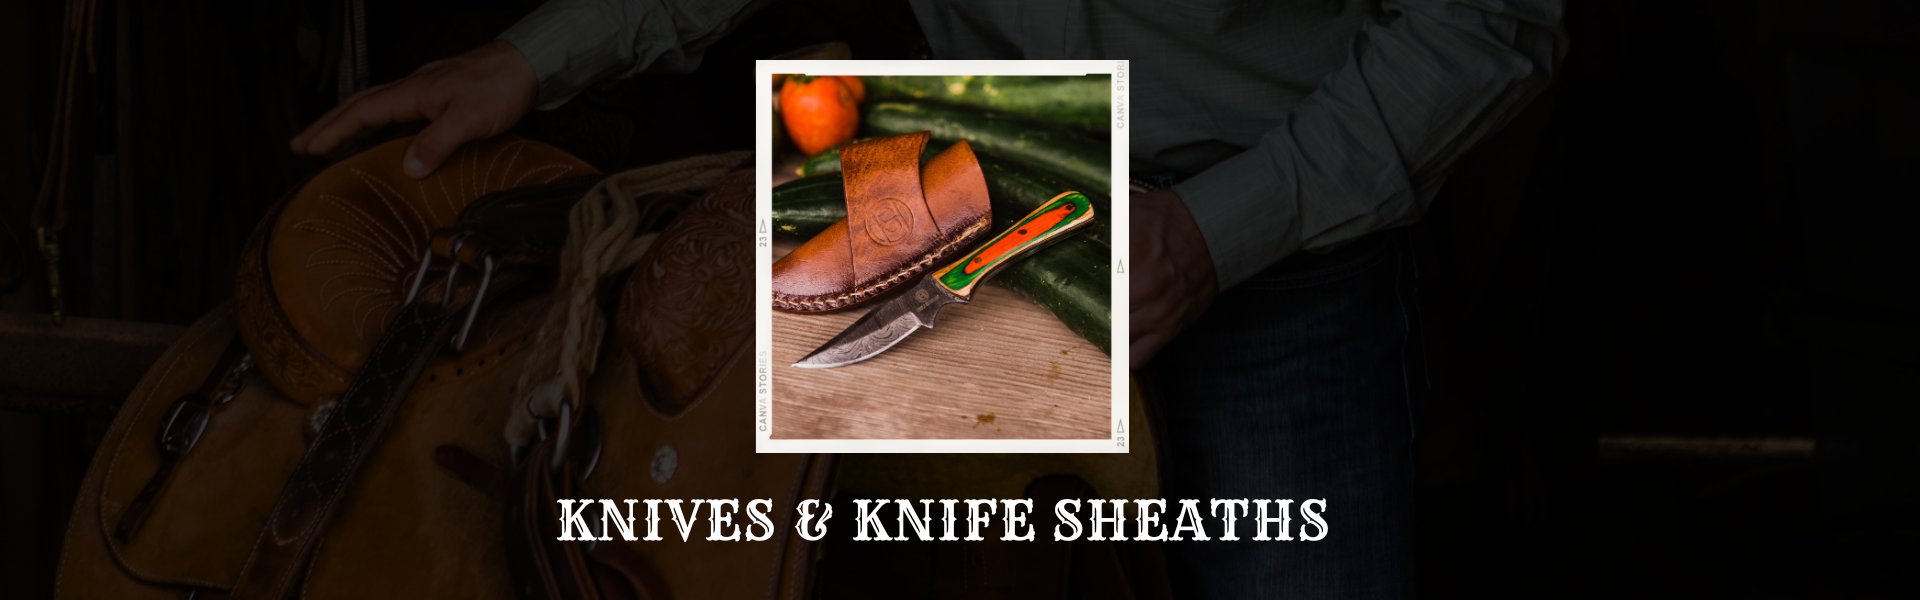 Knives & Knife Sheaths